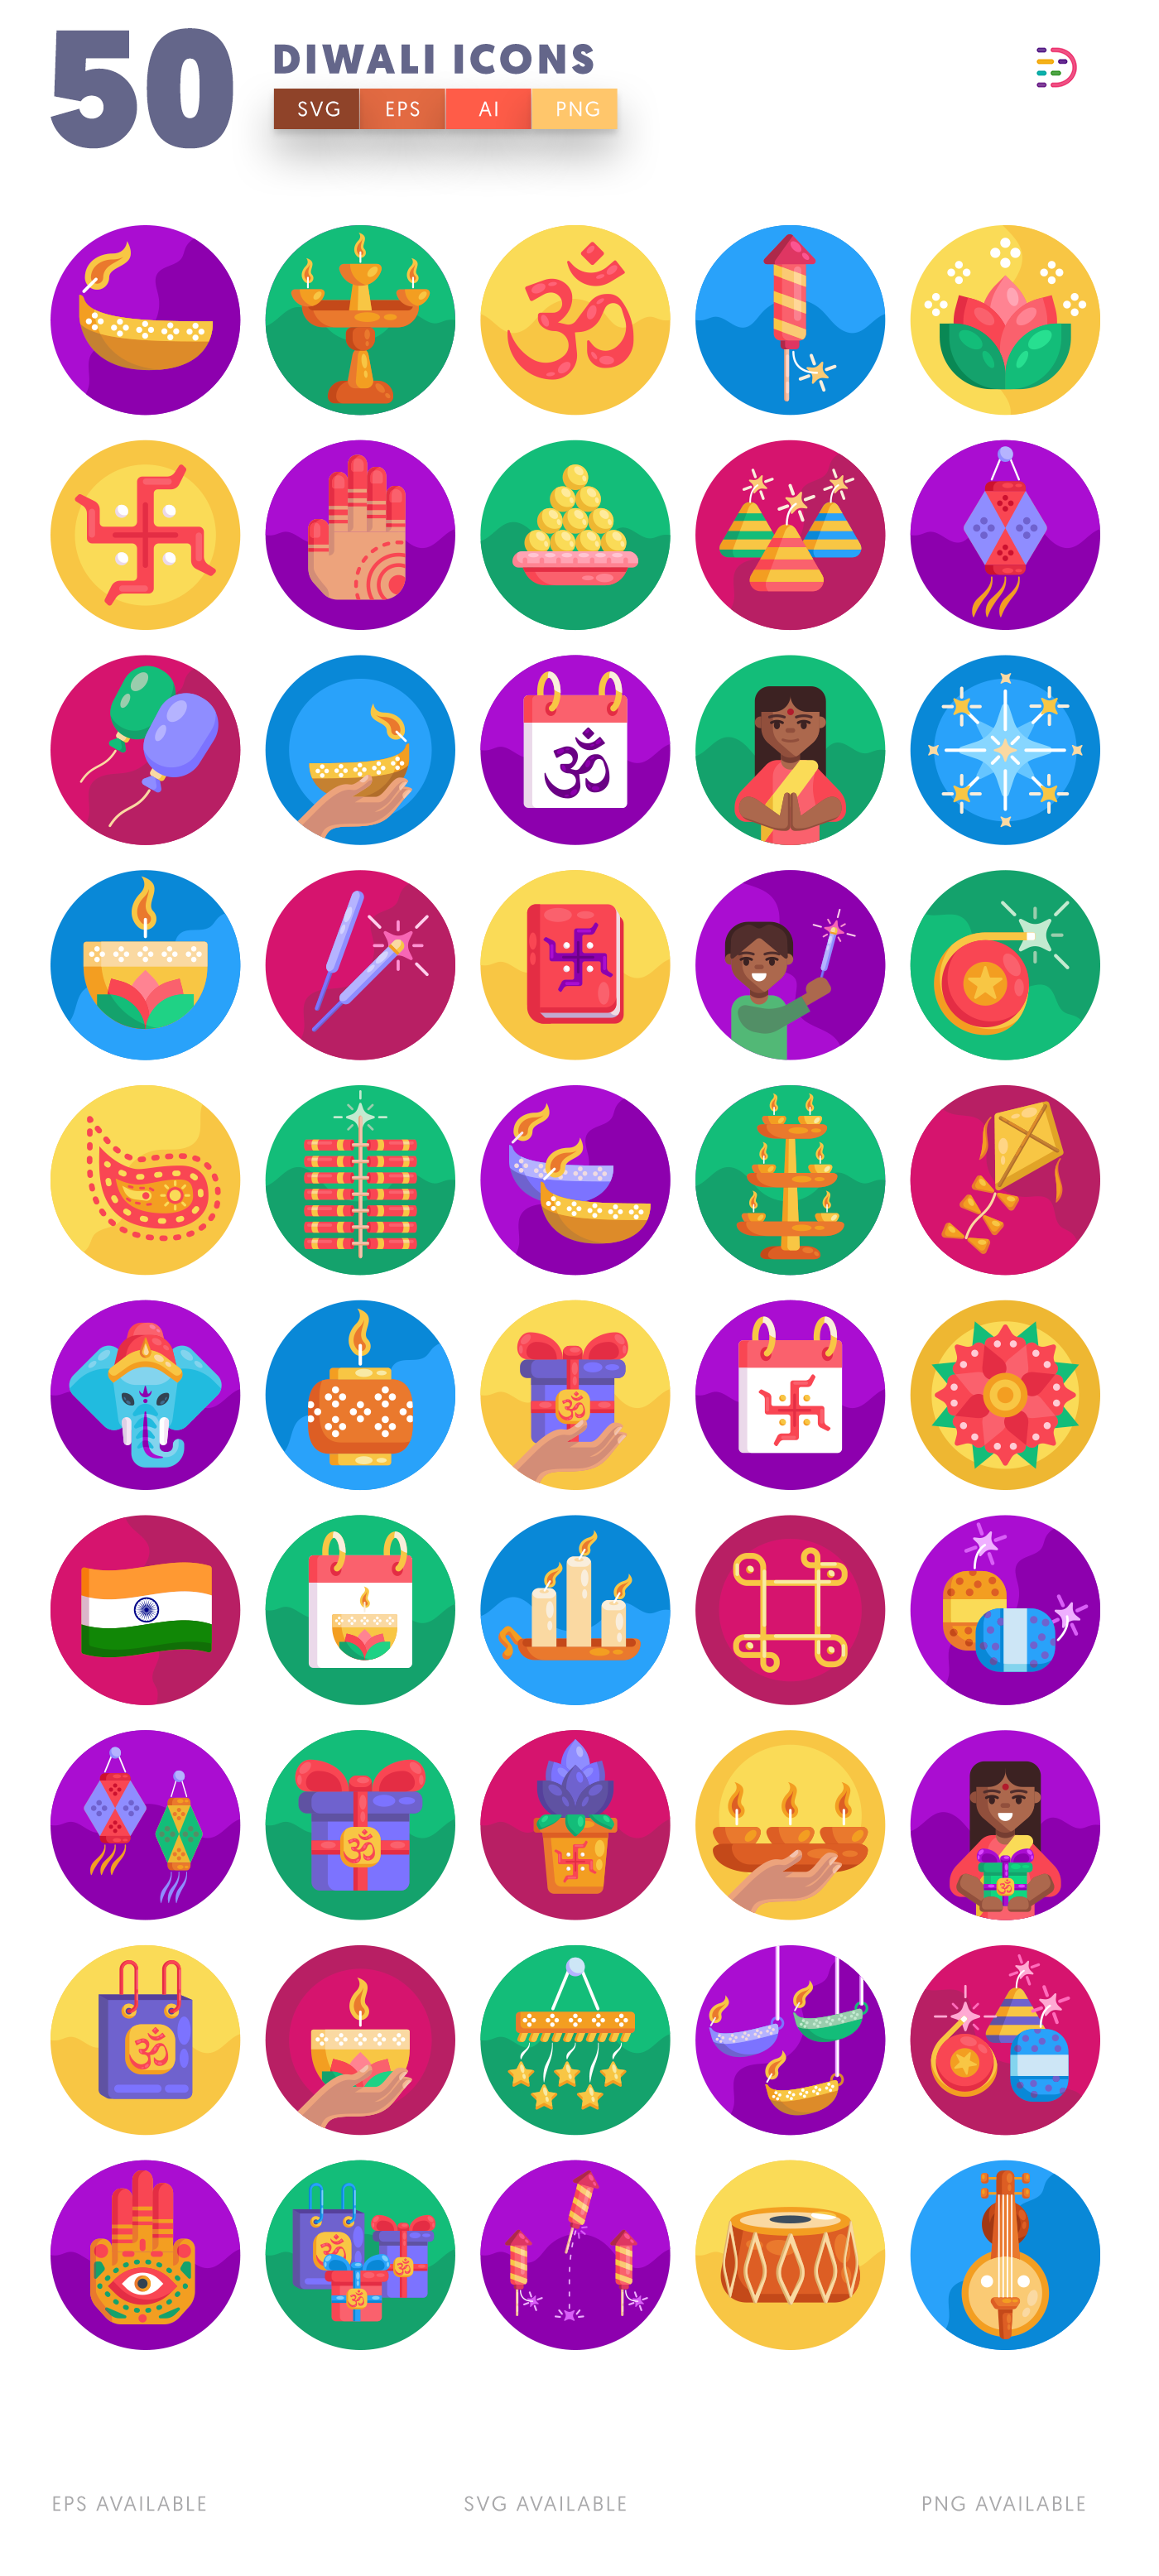 Diwali icon pack